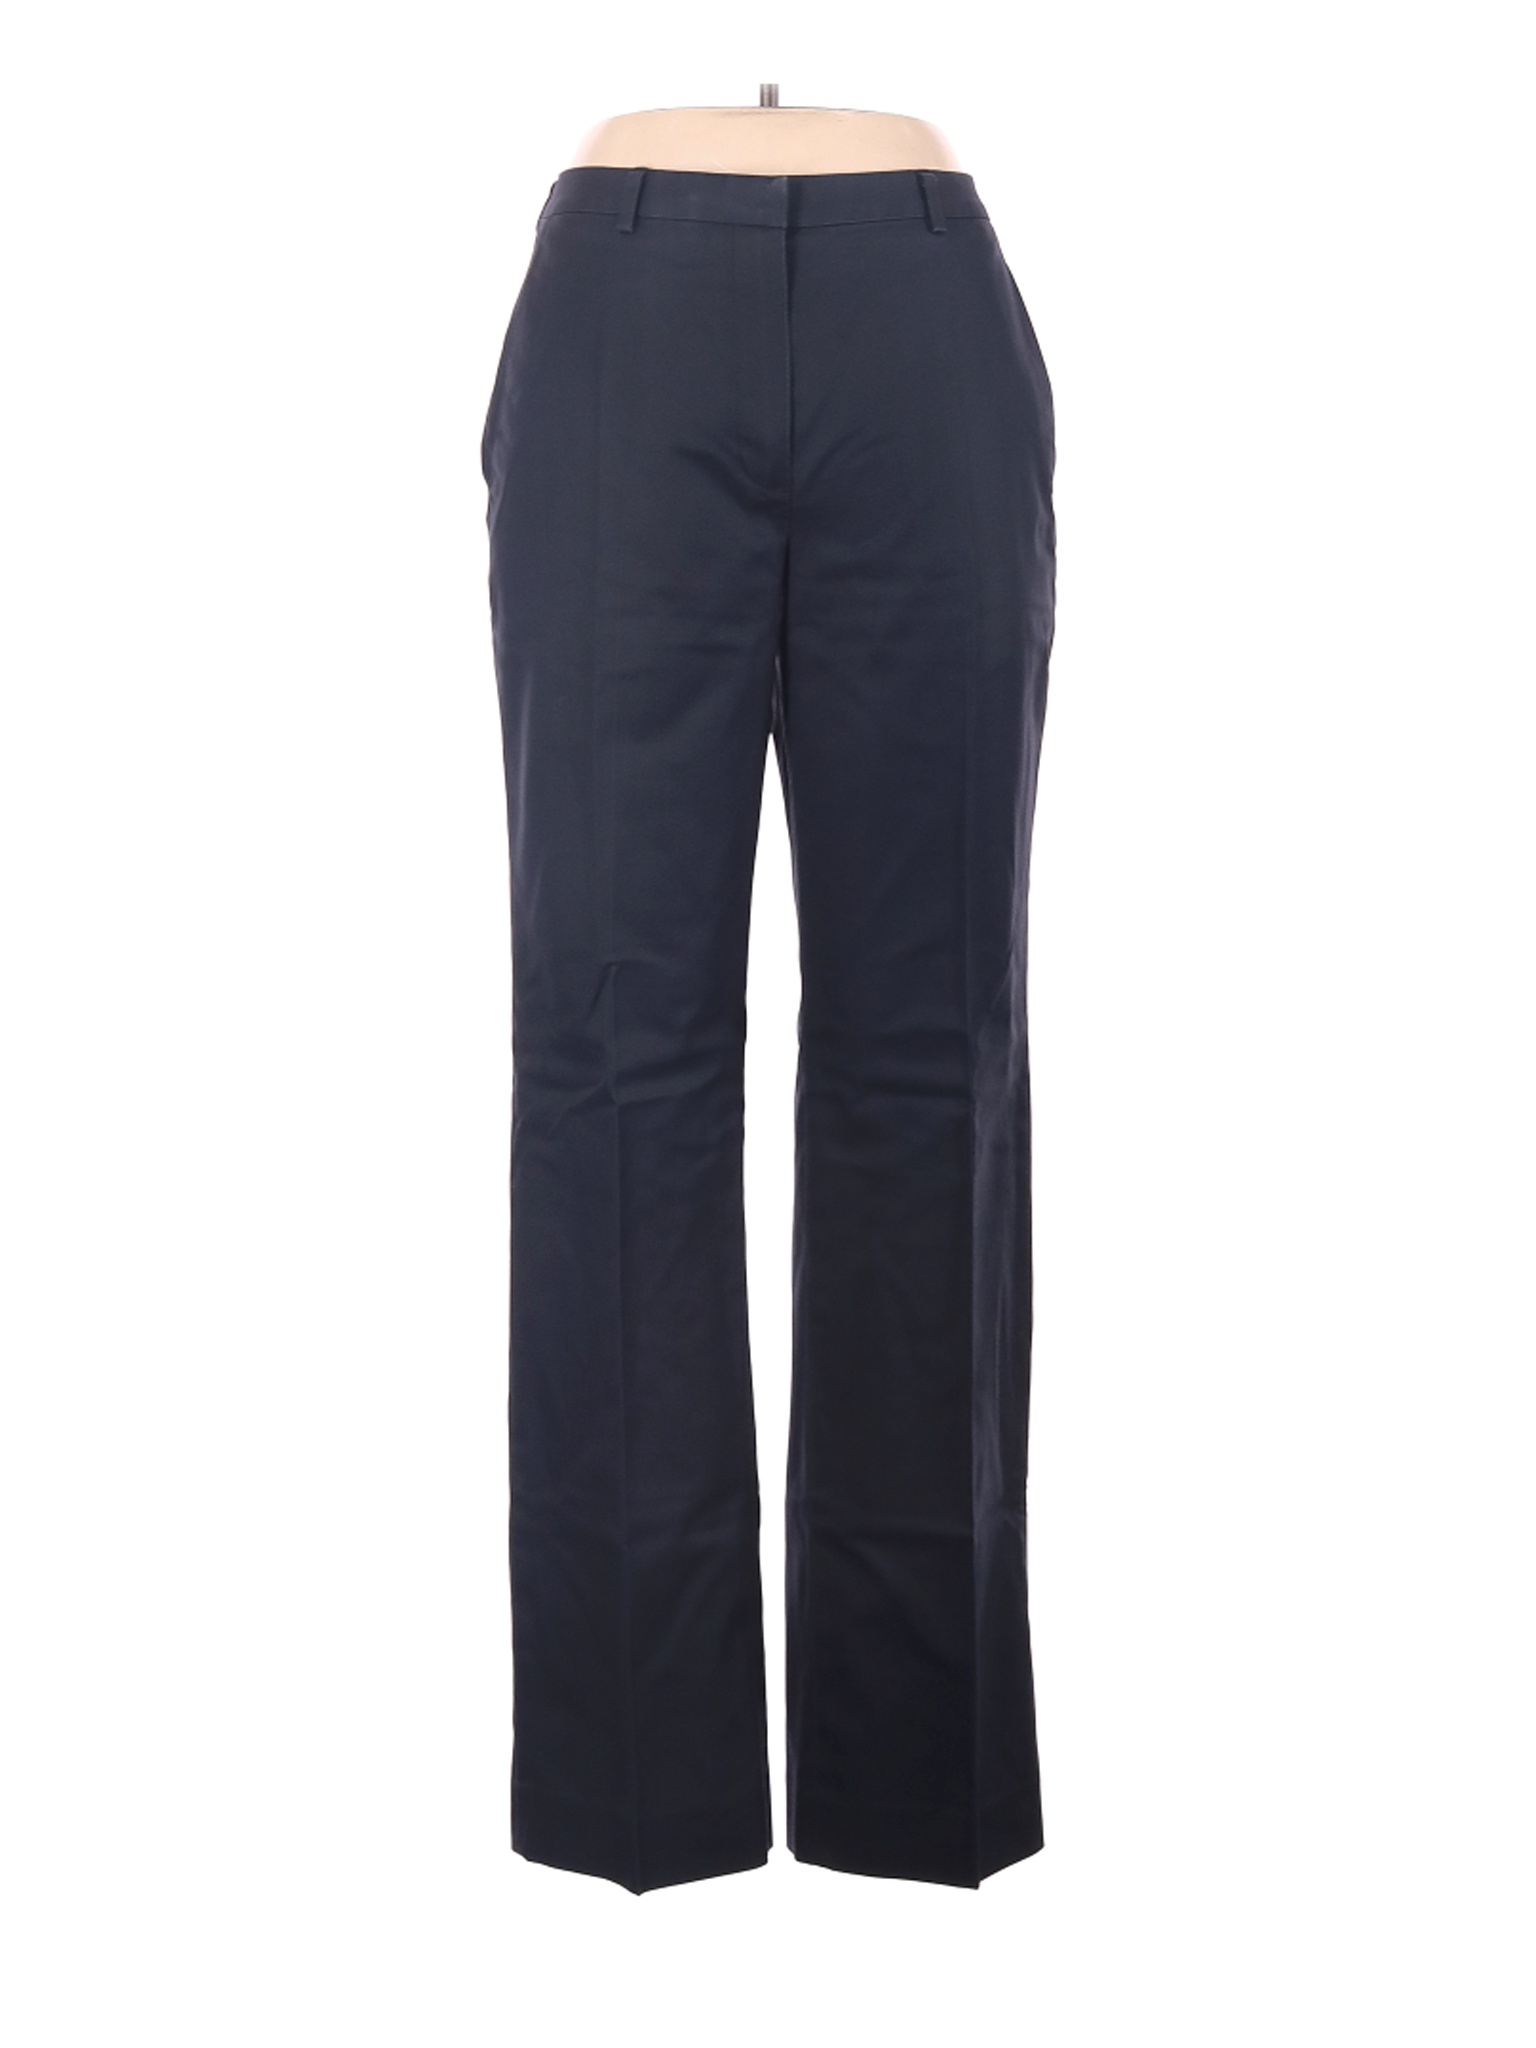 Brooks Brothers Women Blue Dress Pants 6 | eBay